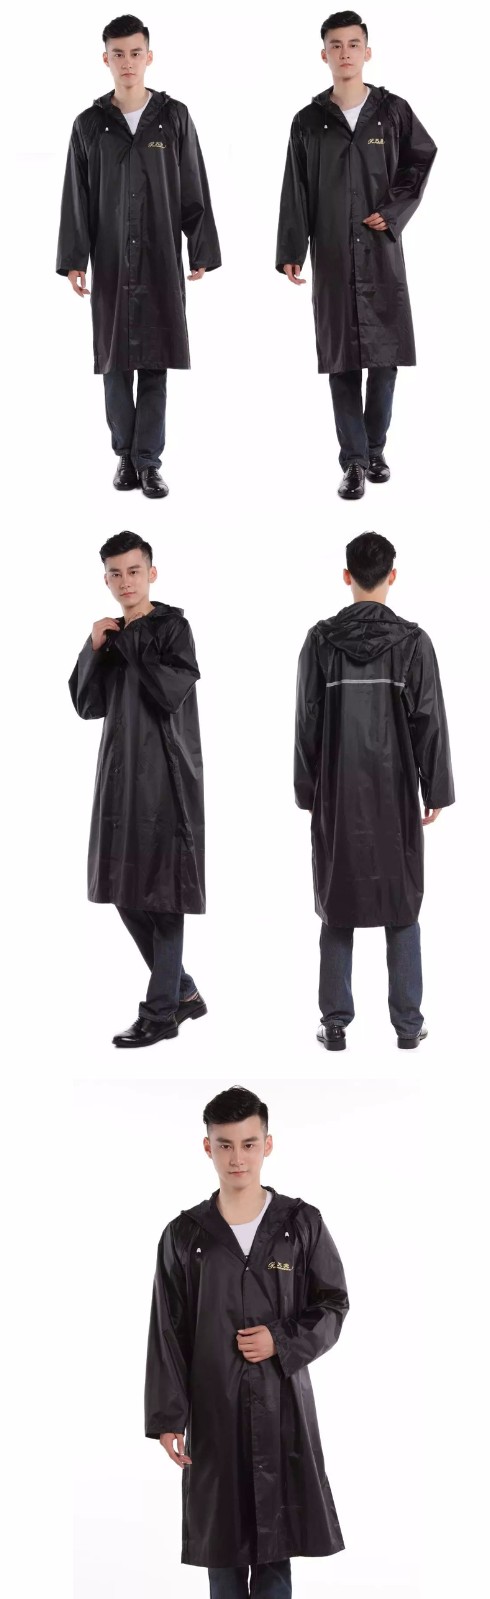 Adult-Outdooors-RainCoat-Long-Poncho-Hood-Thicker-Reflective-Types-Design-Work-Travel-Rainwear-1104682